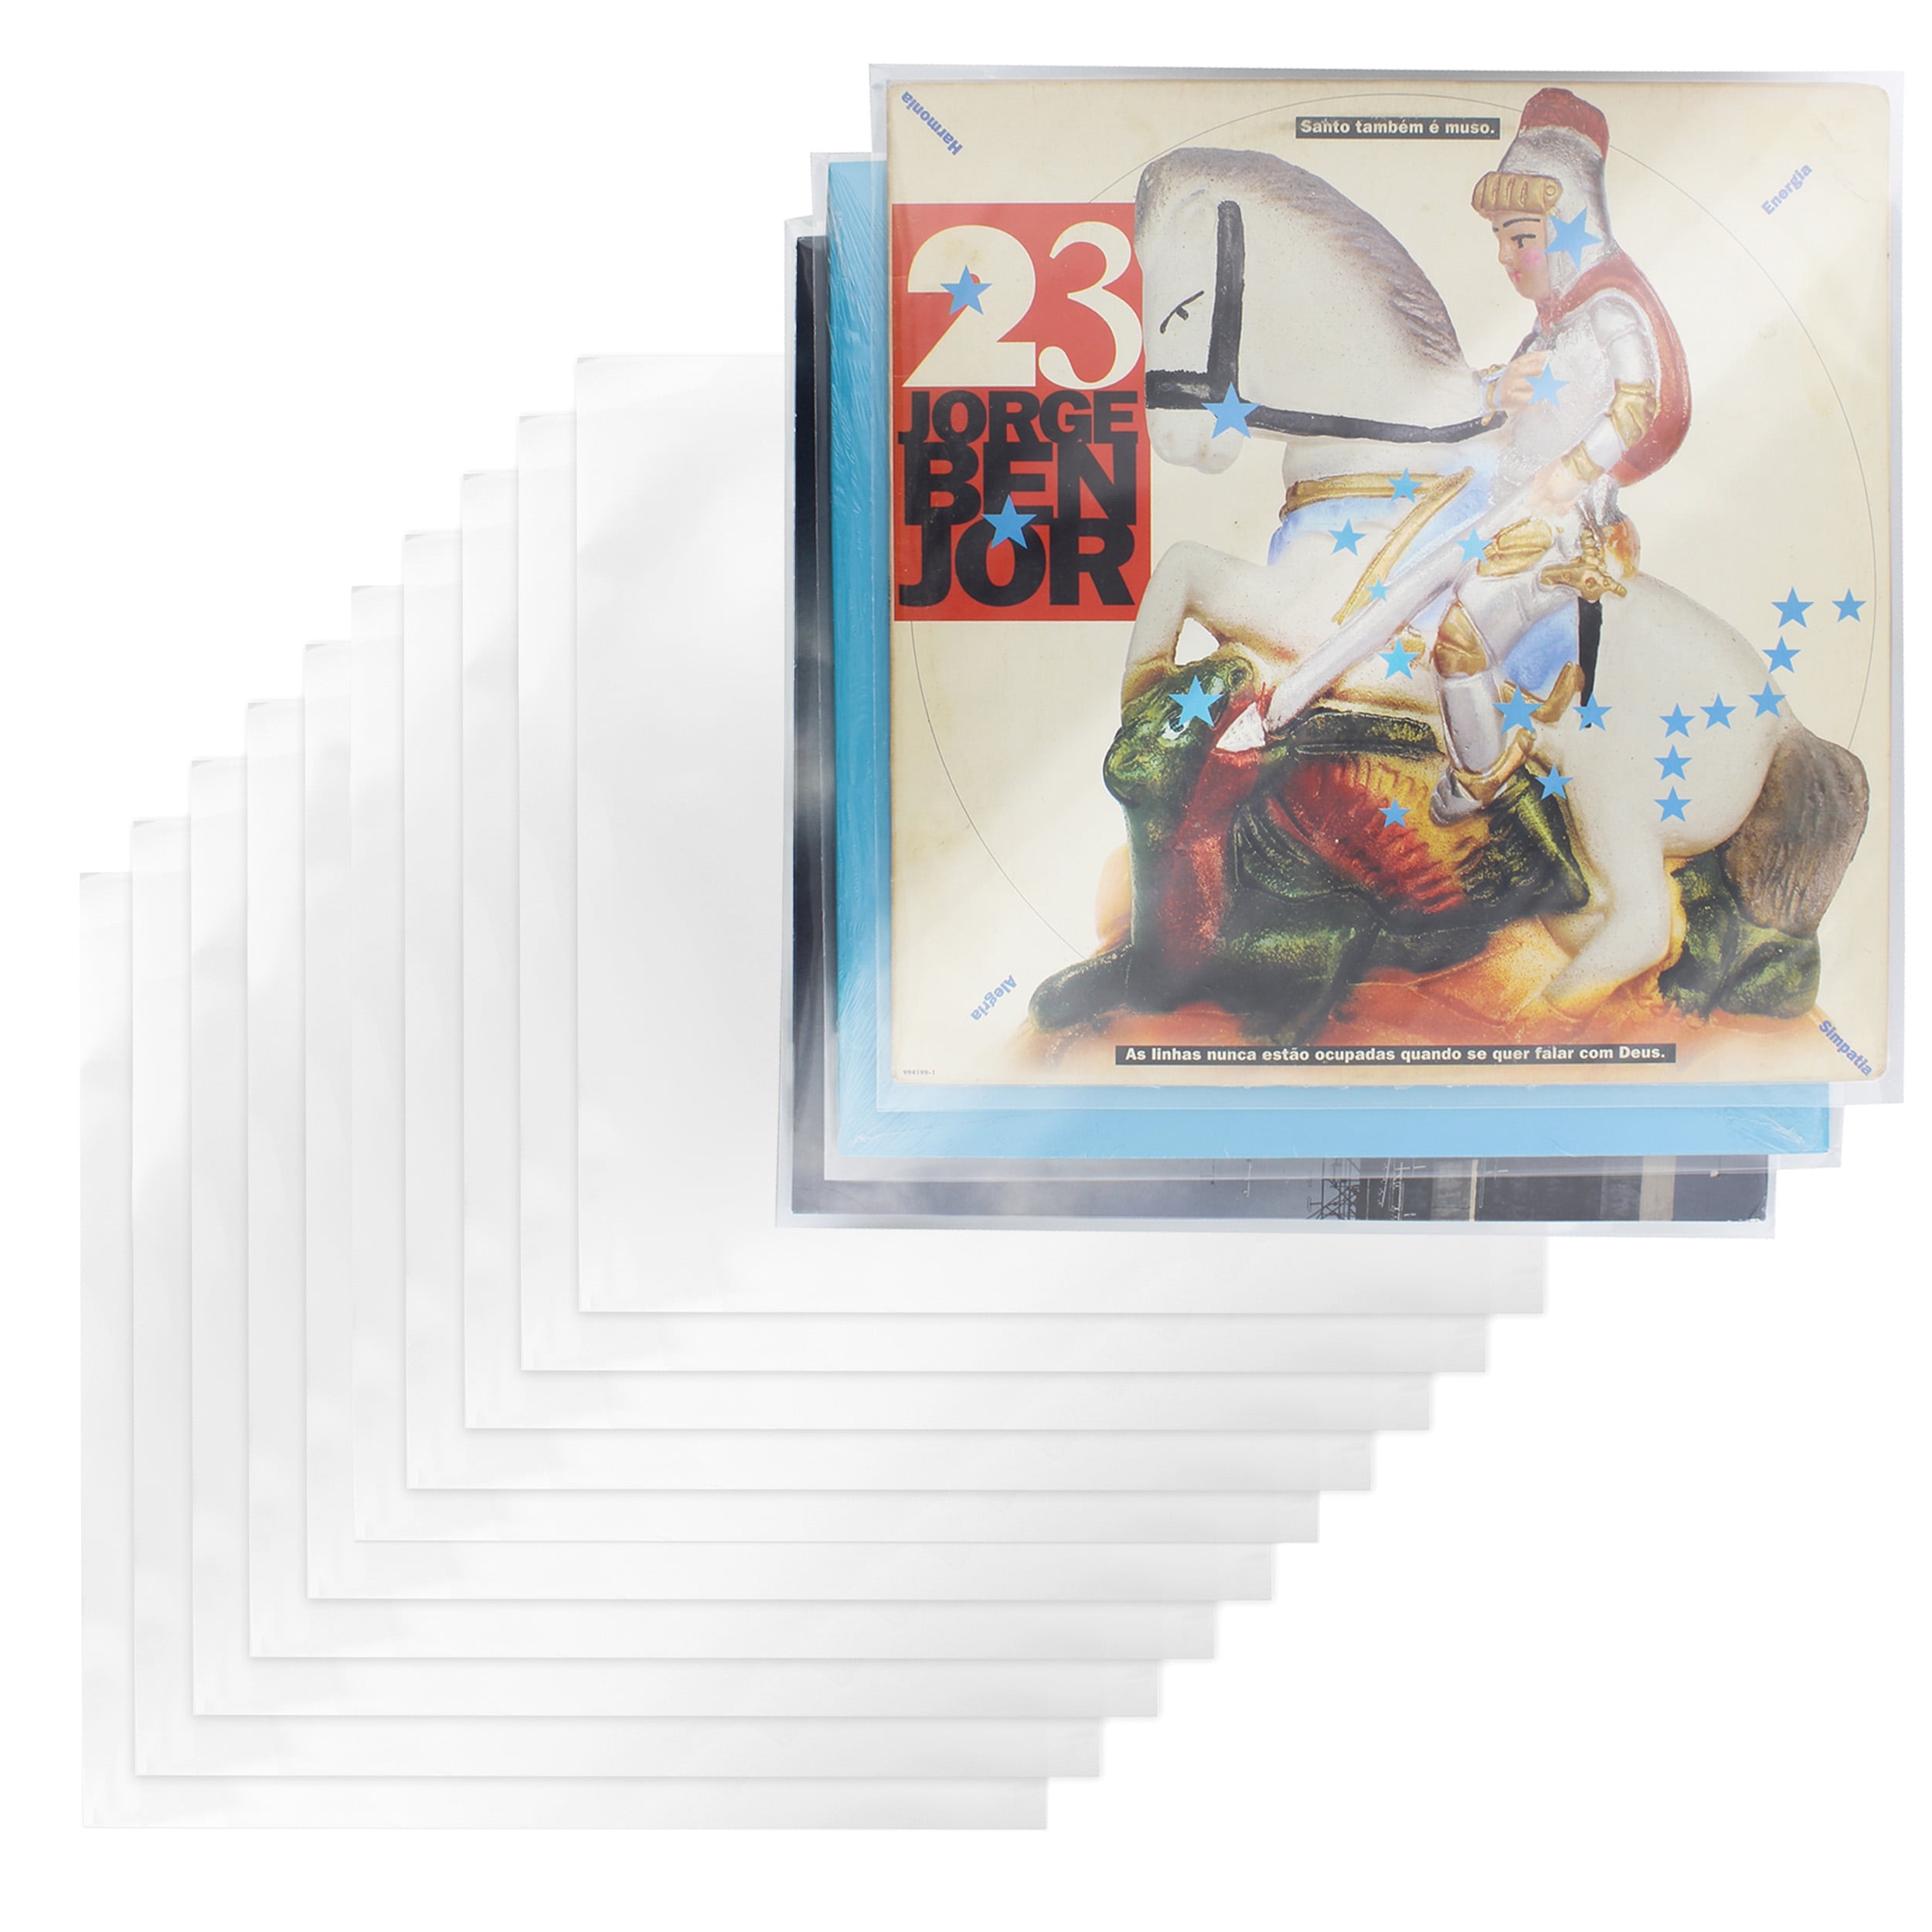 Acid-Free Medium Paper Record Sleeves (25 Pack) 12